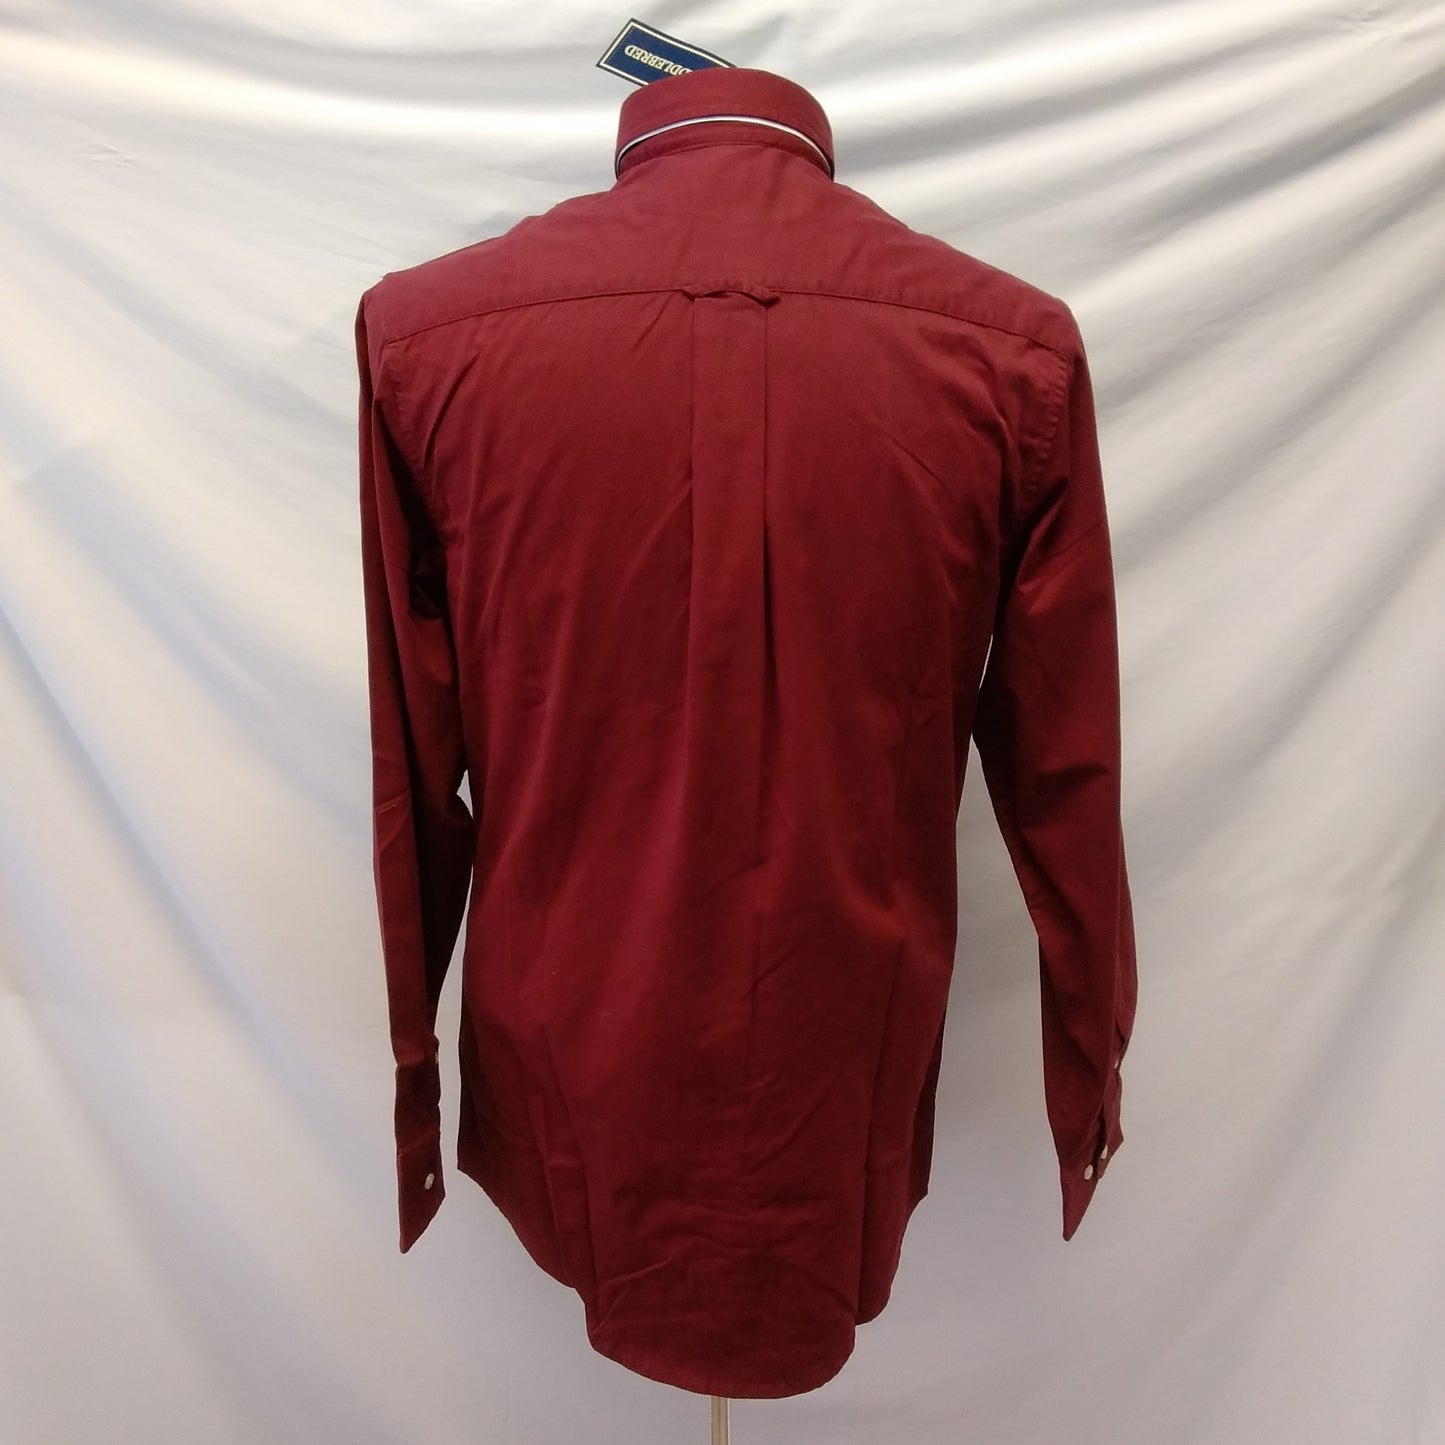 NWT - Saddlebred Burgundy Long Sleeve Shirt - S